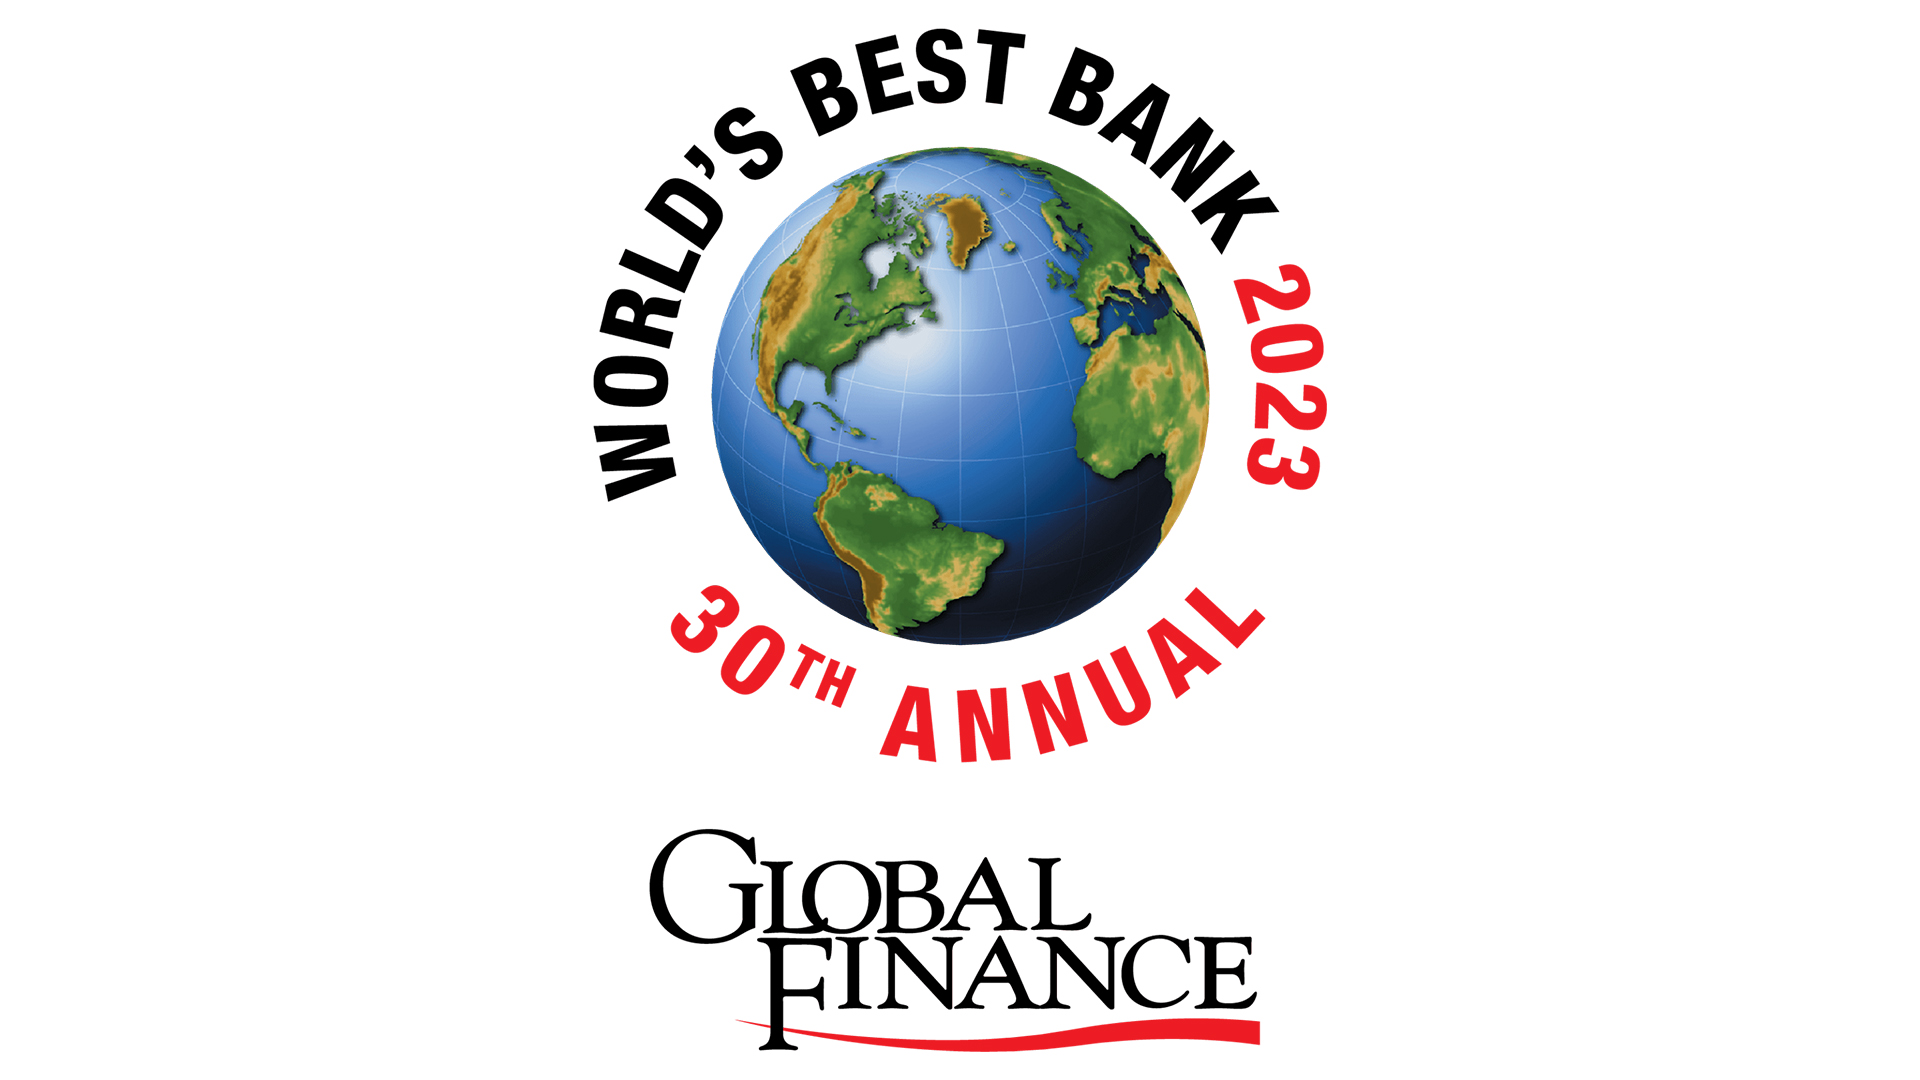 Global Finance premia al BANGE como el Mejor Banco 2020 que opera en Guinea Ecuatorial